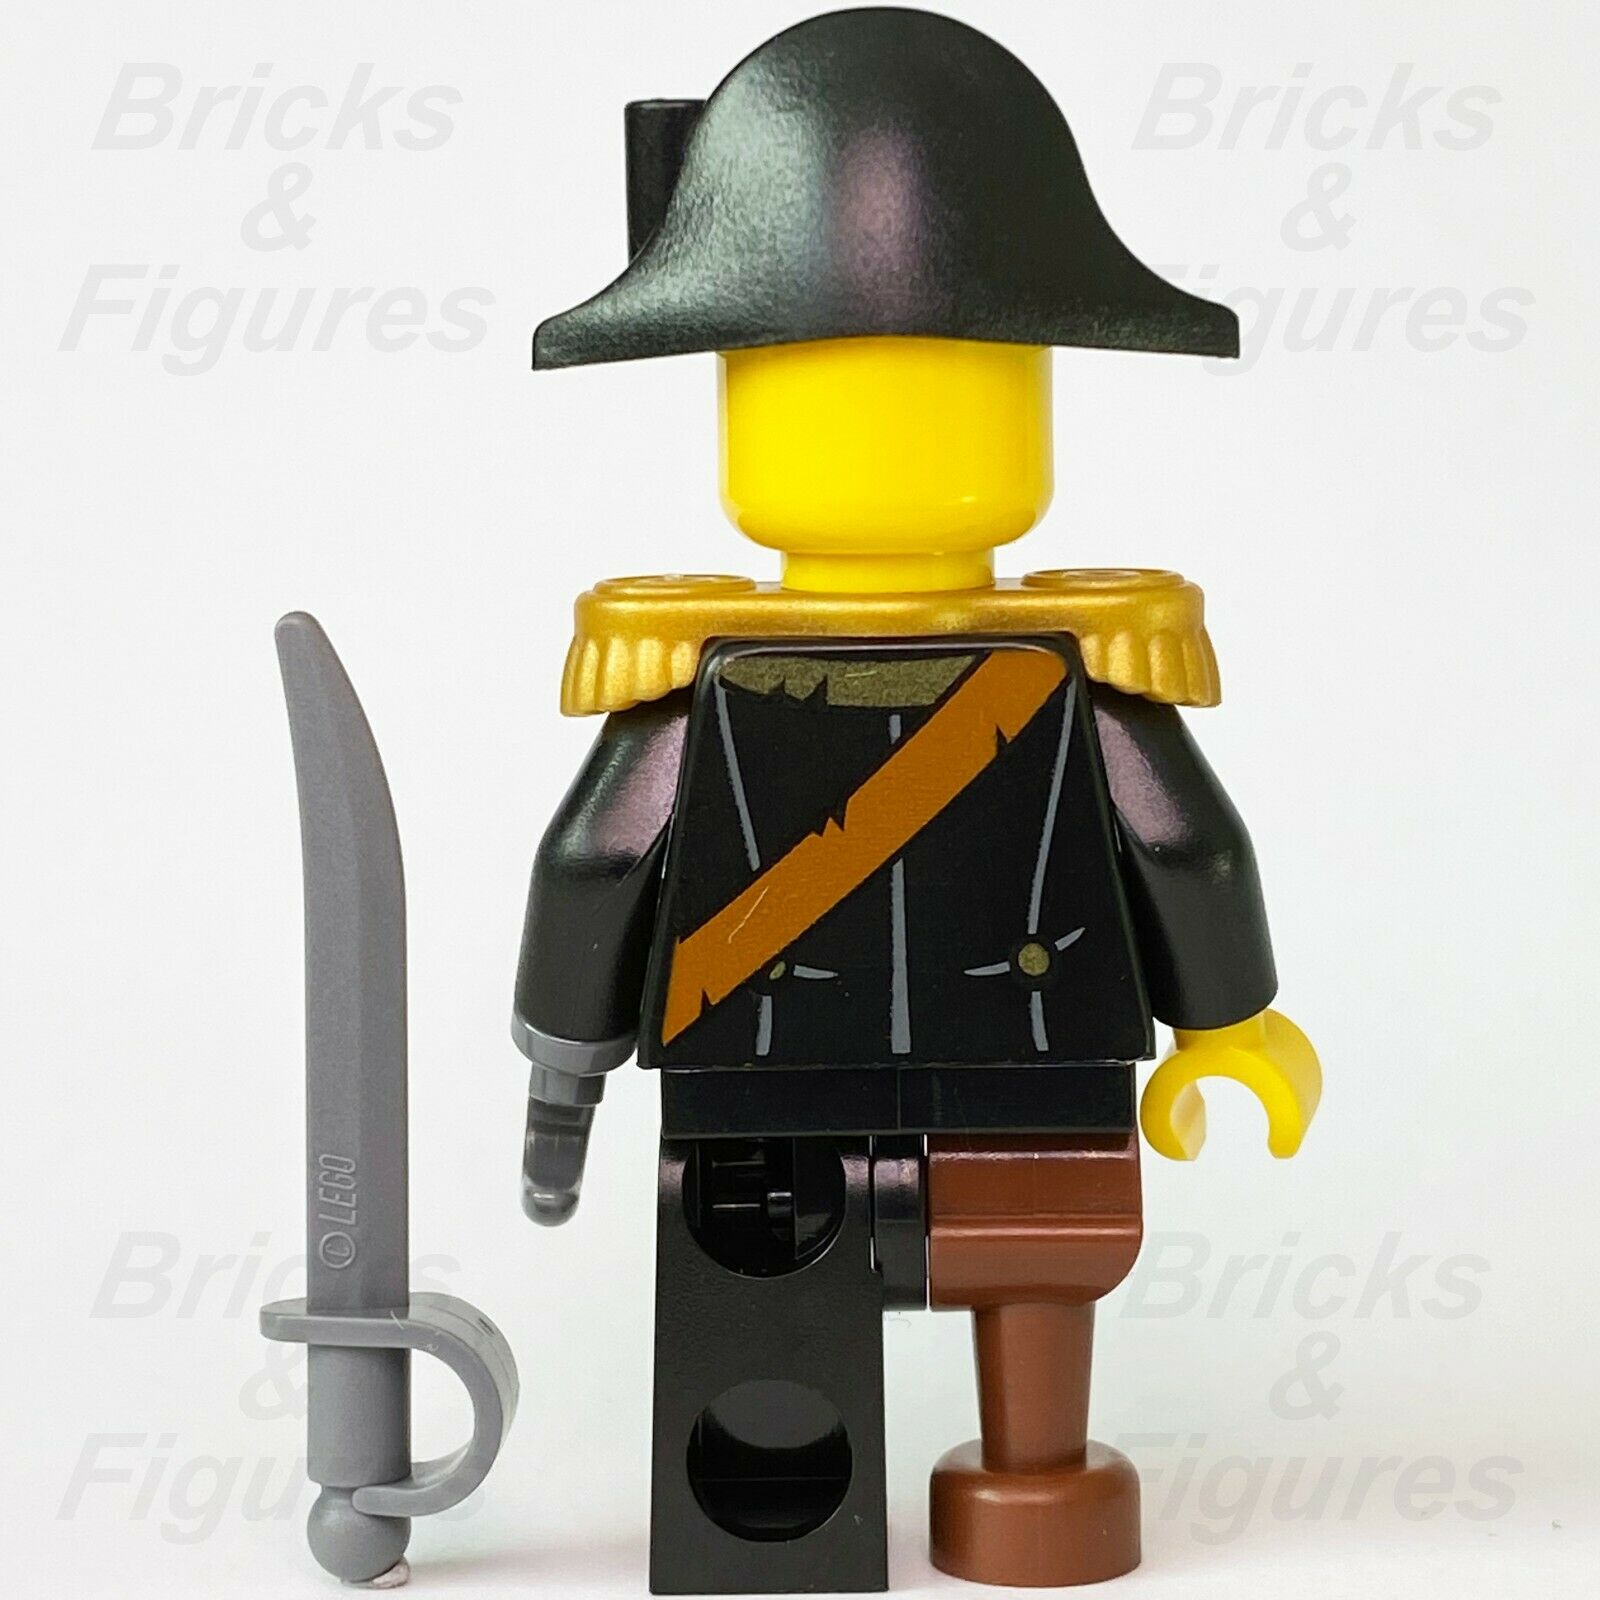 New Ideas LEGO Captain Redbeard Pirates Minifigure with Sword from set 21322 - Bricks & Figures